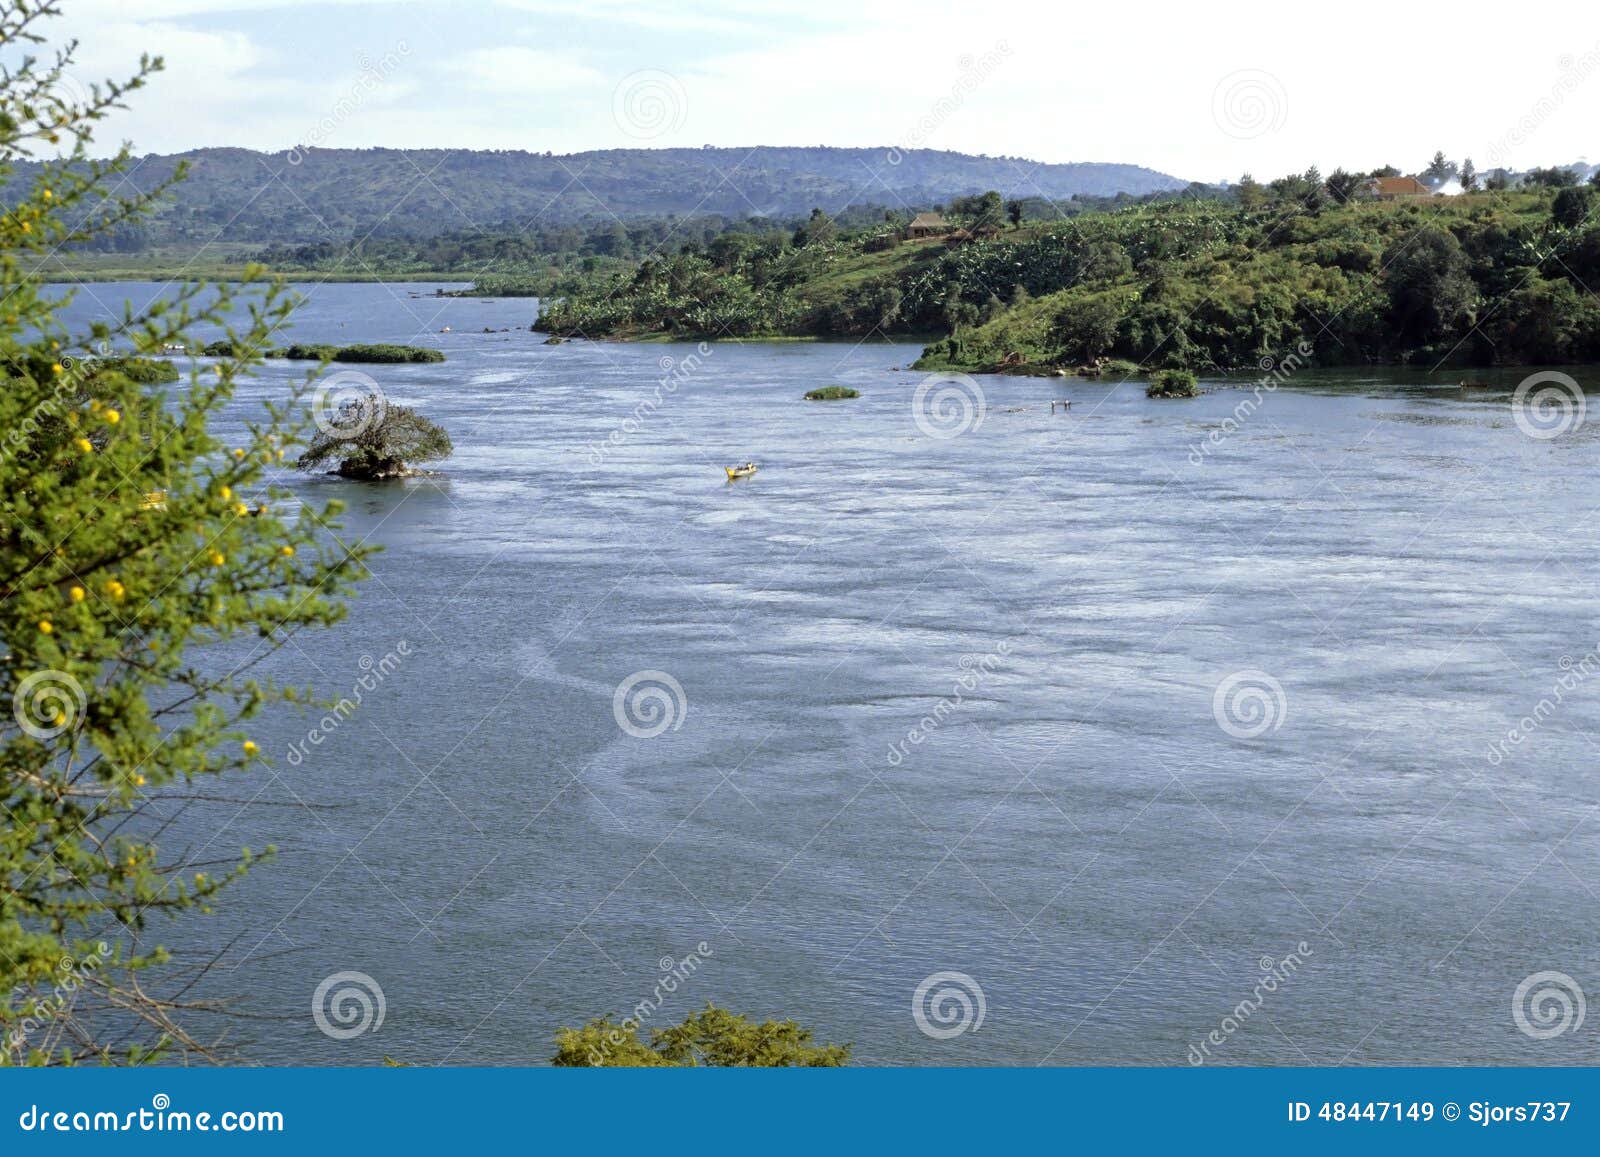 the source of the white nile river in uganda